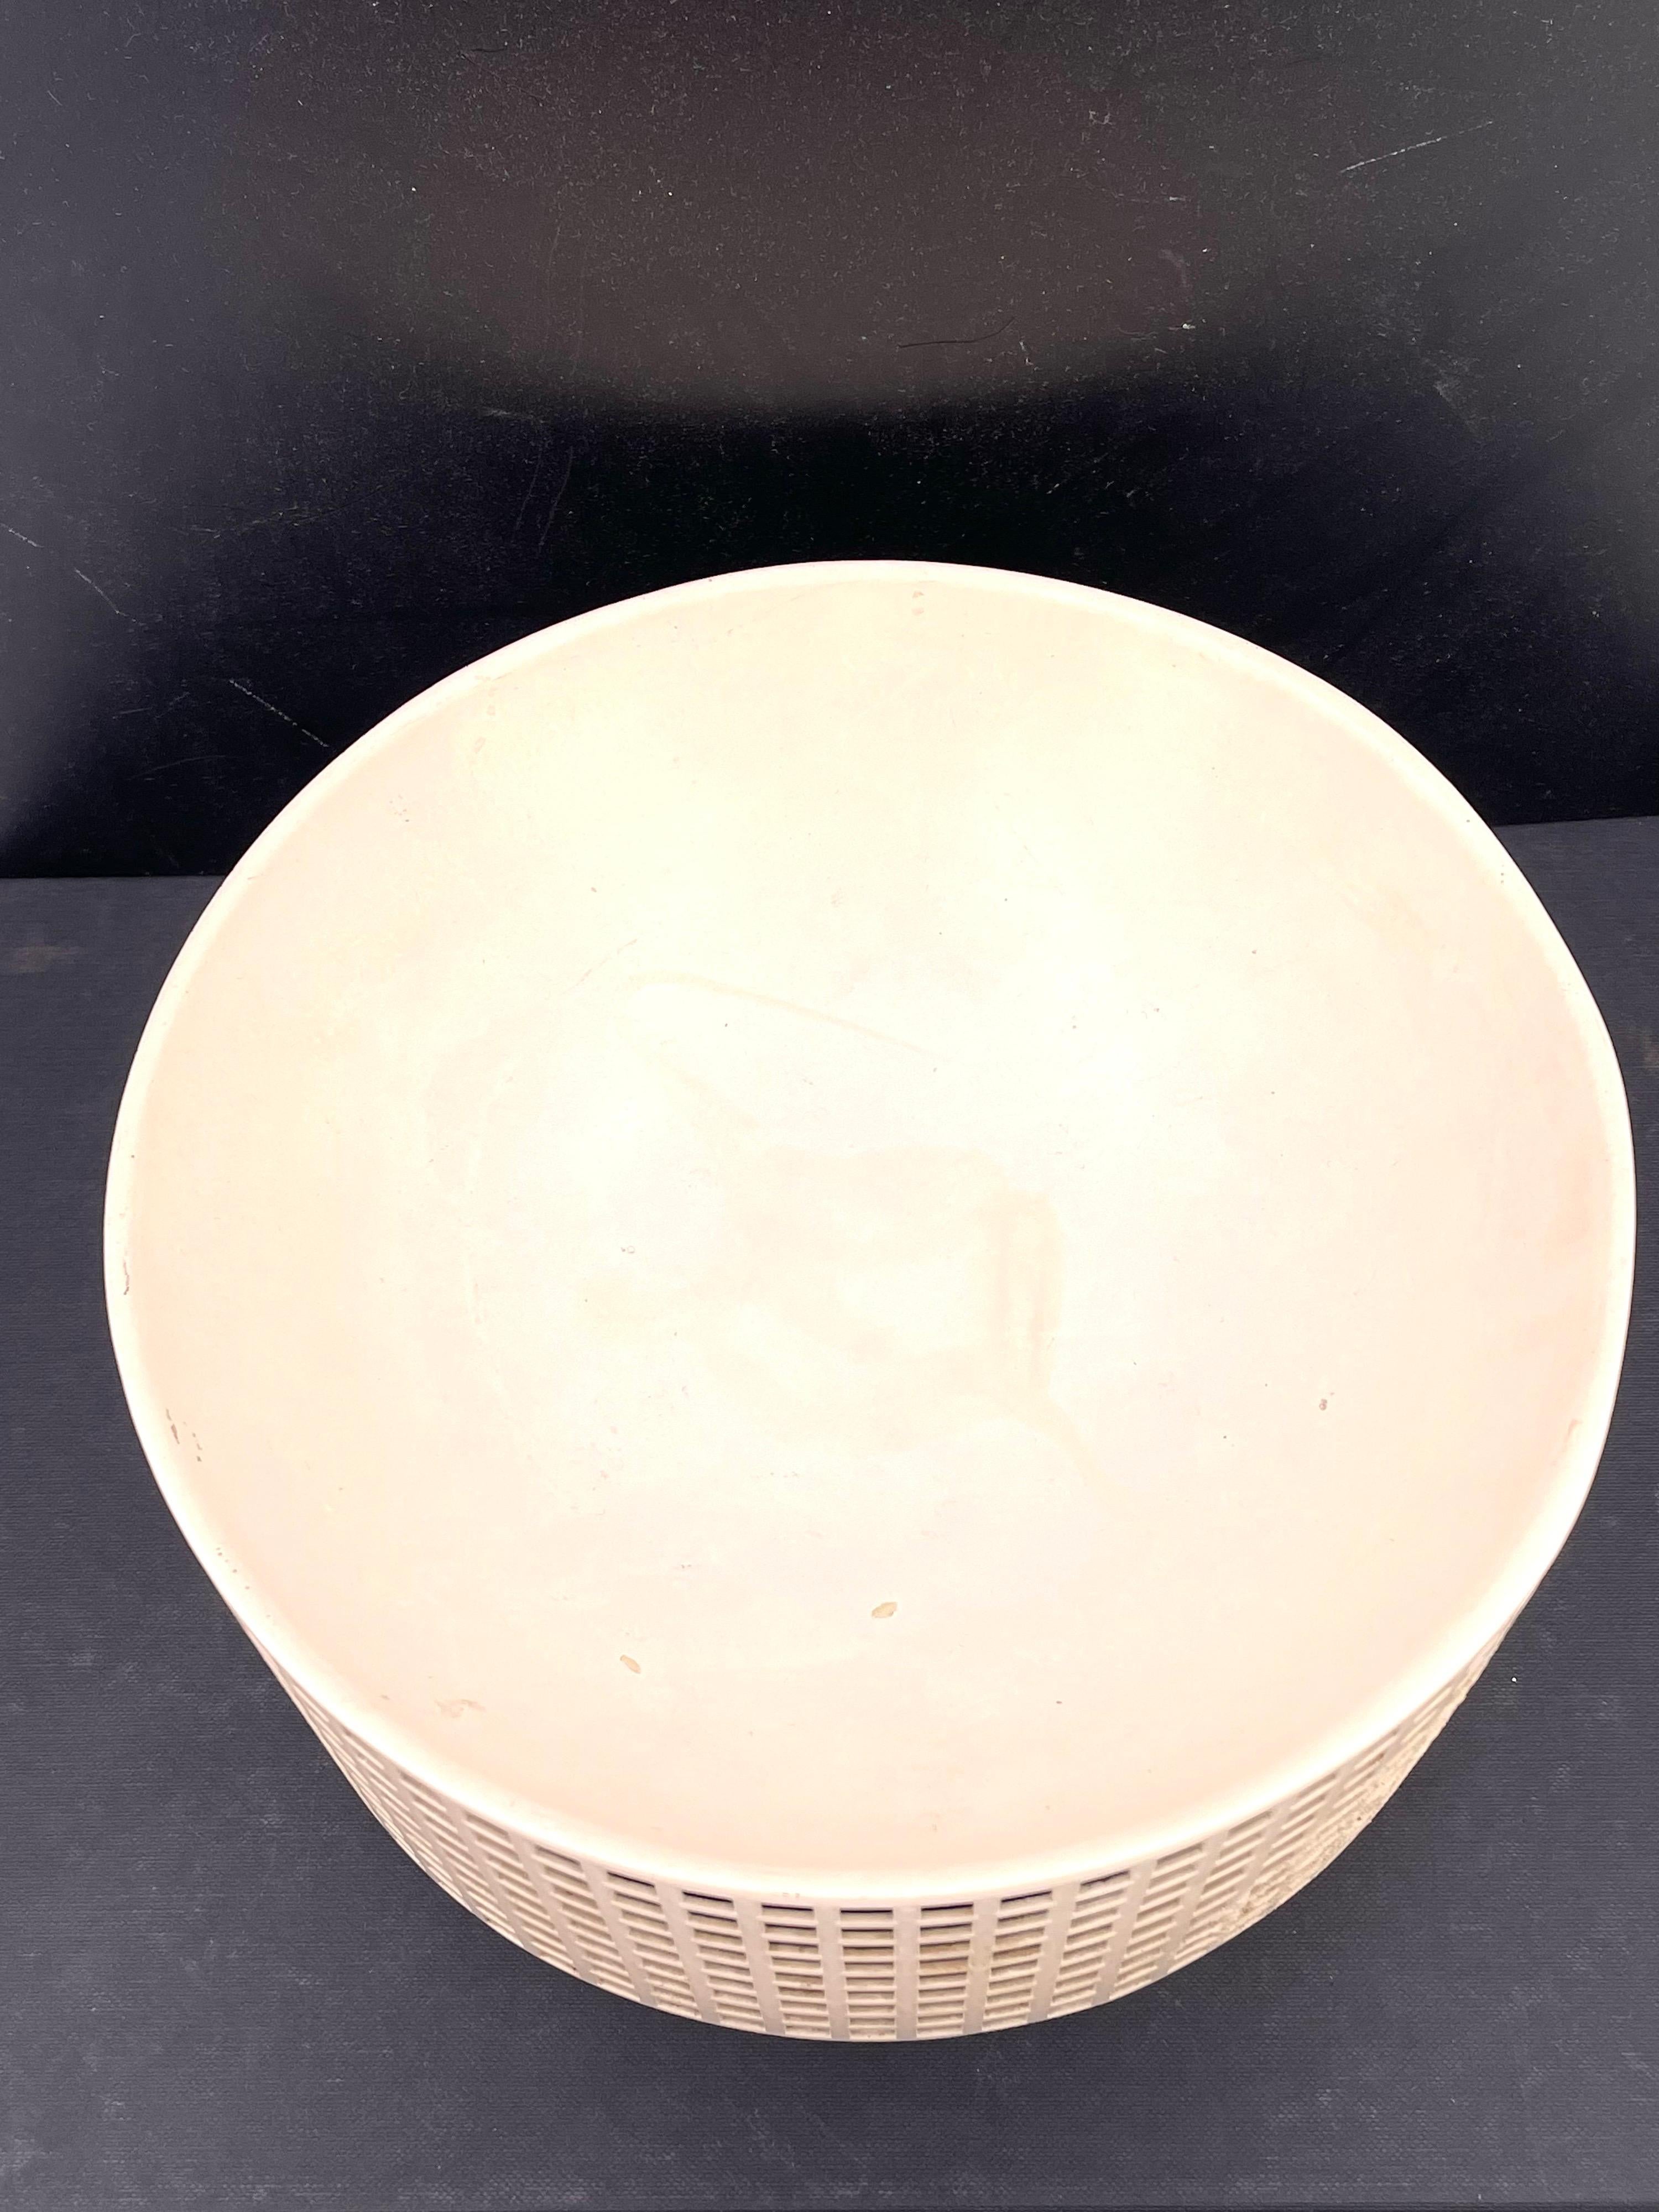 20th Century Rare Perforated Metal Bowl Designed by Joseph Hoffman for Bieffeplast